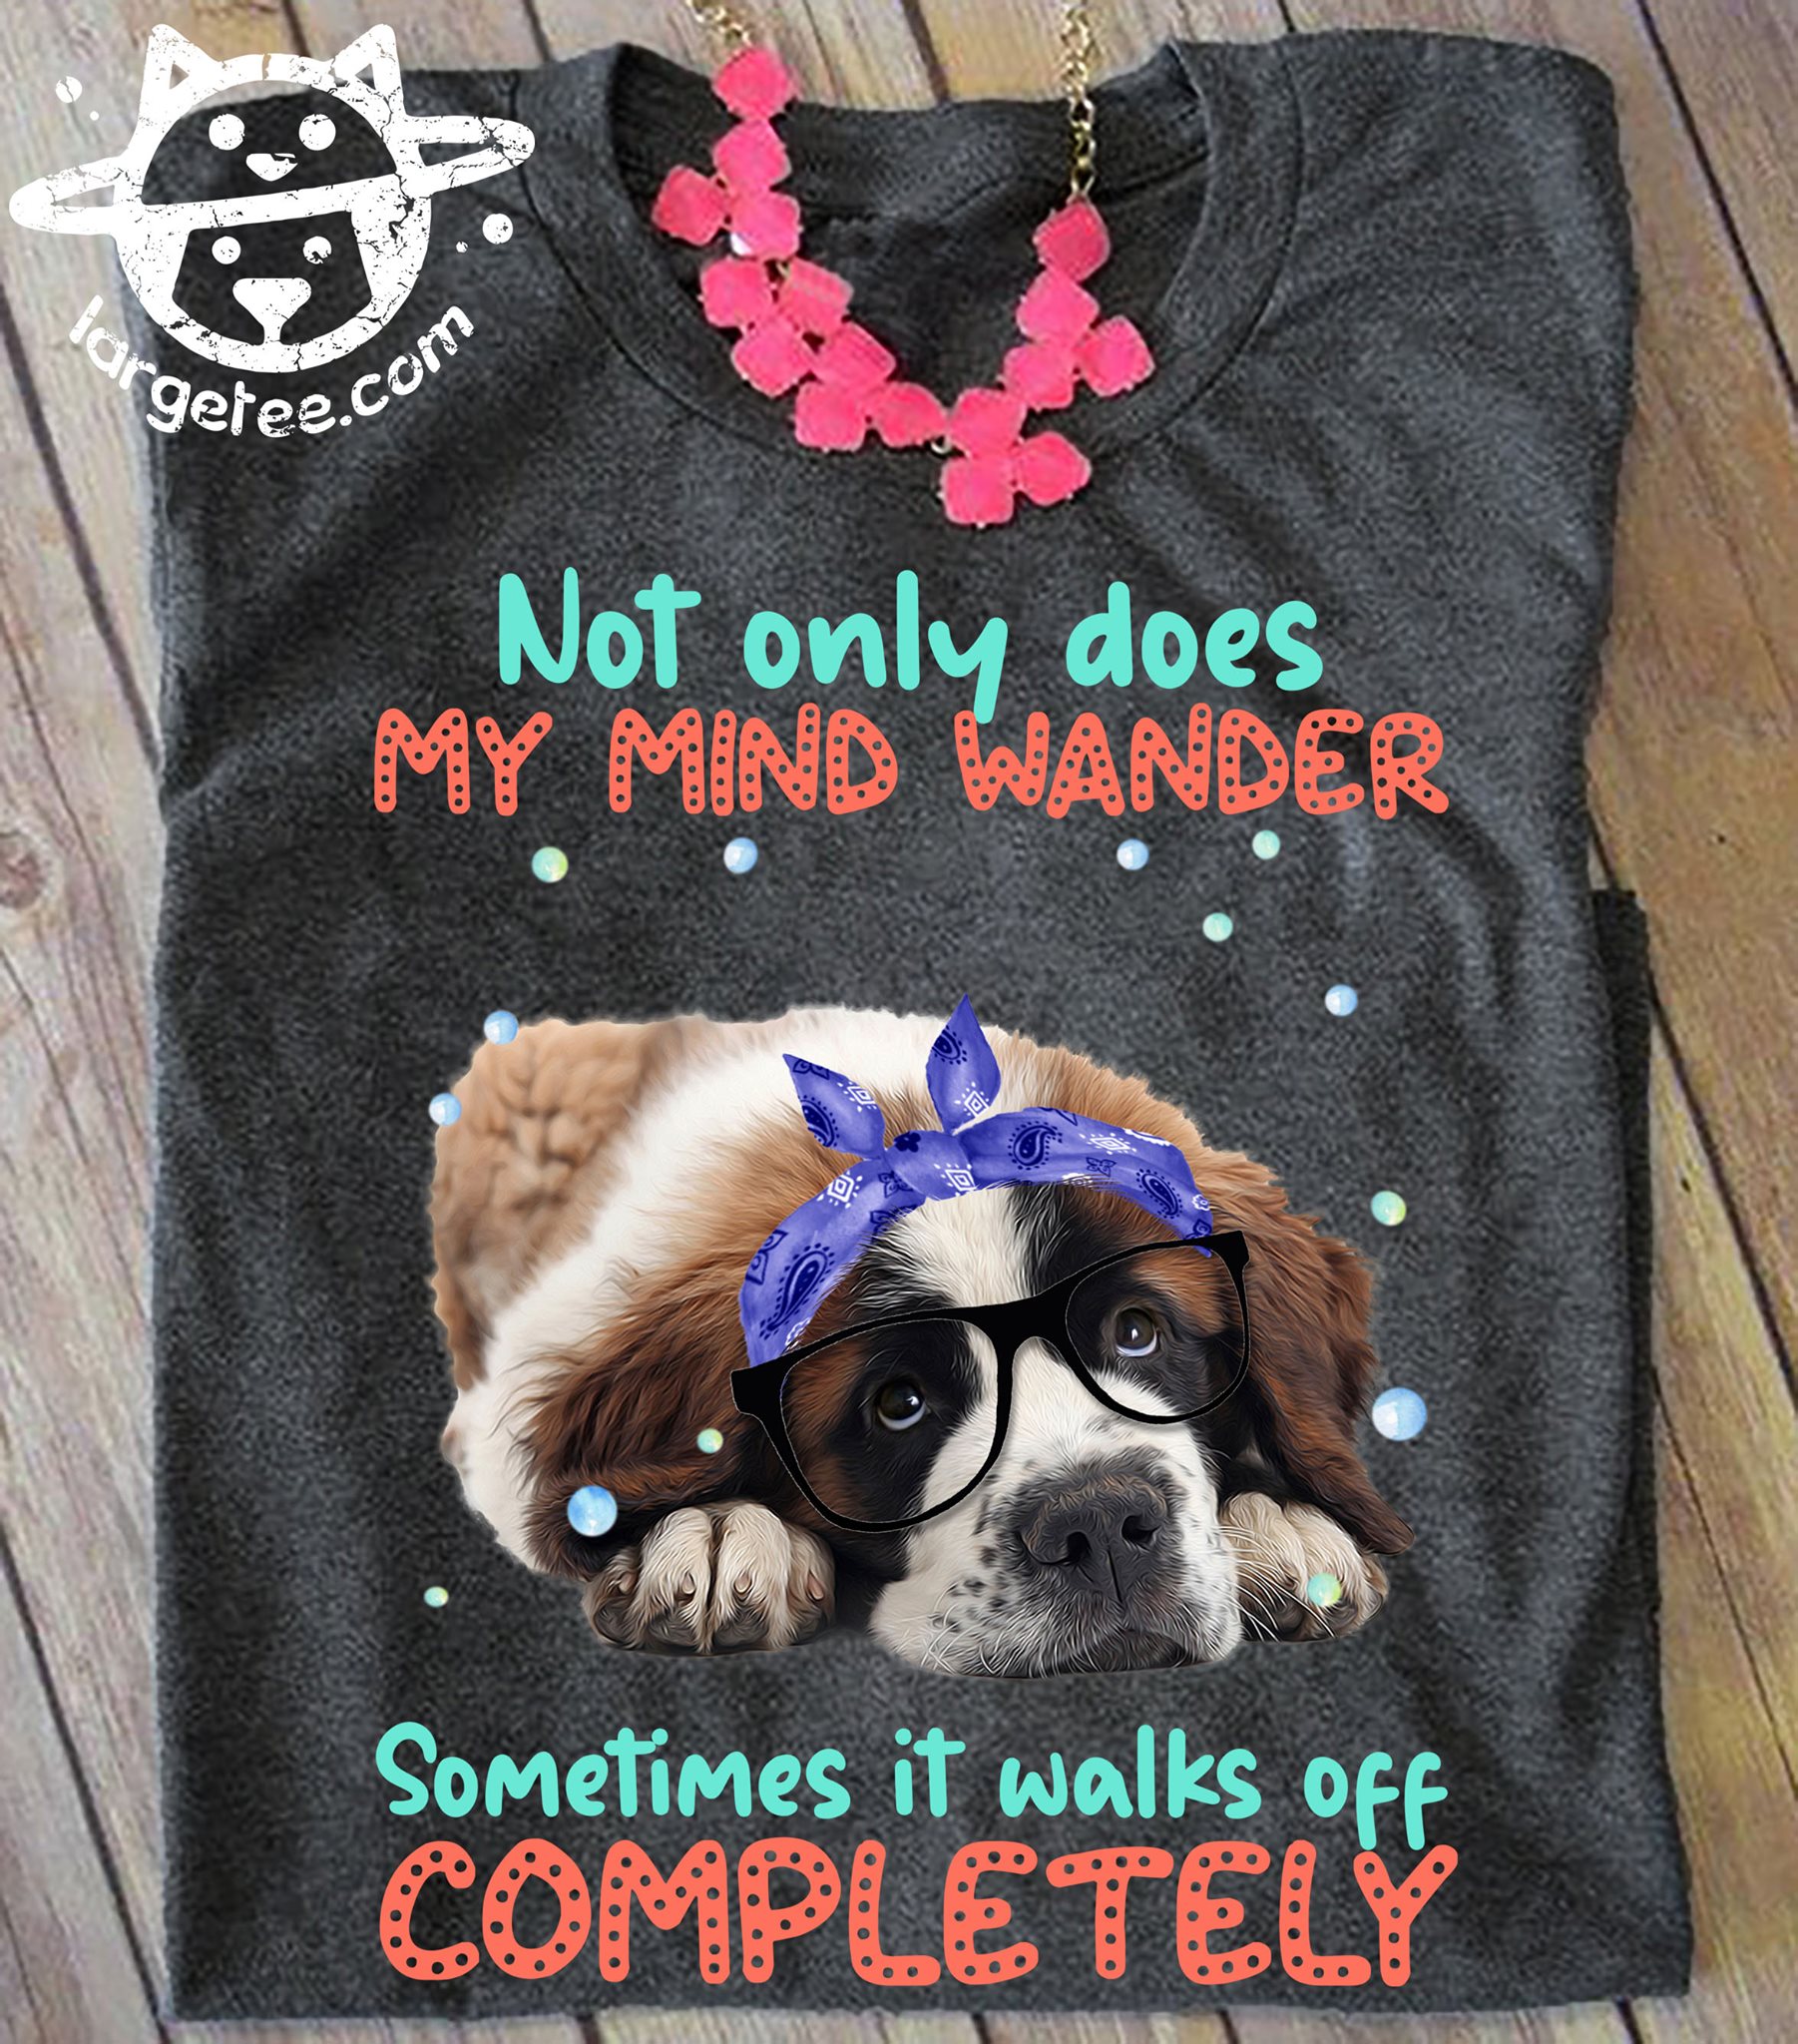 Not only does my mind wander sometimes it walks off completely - St. Bernard dog